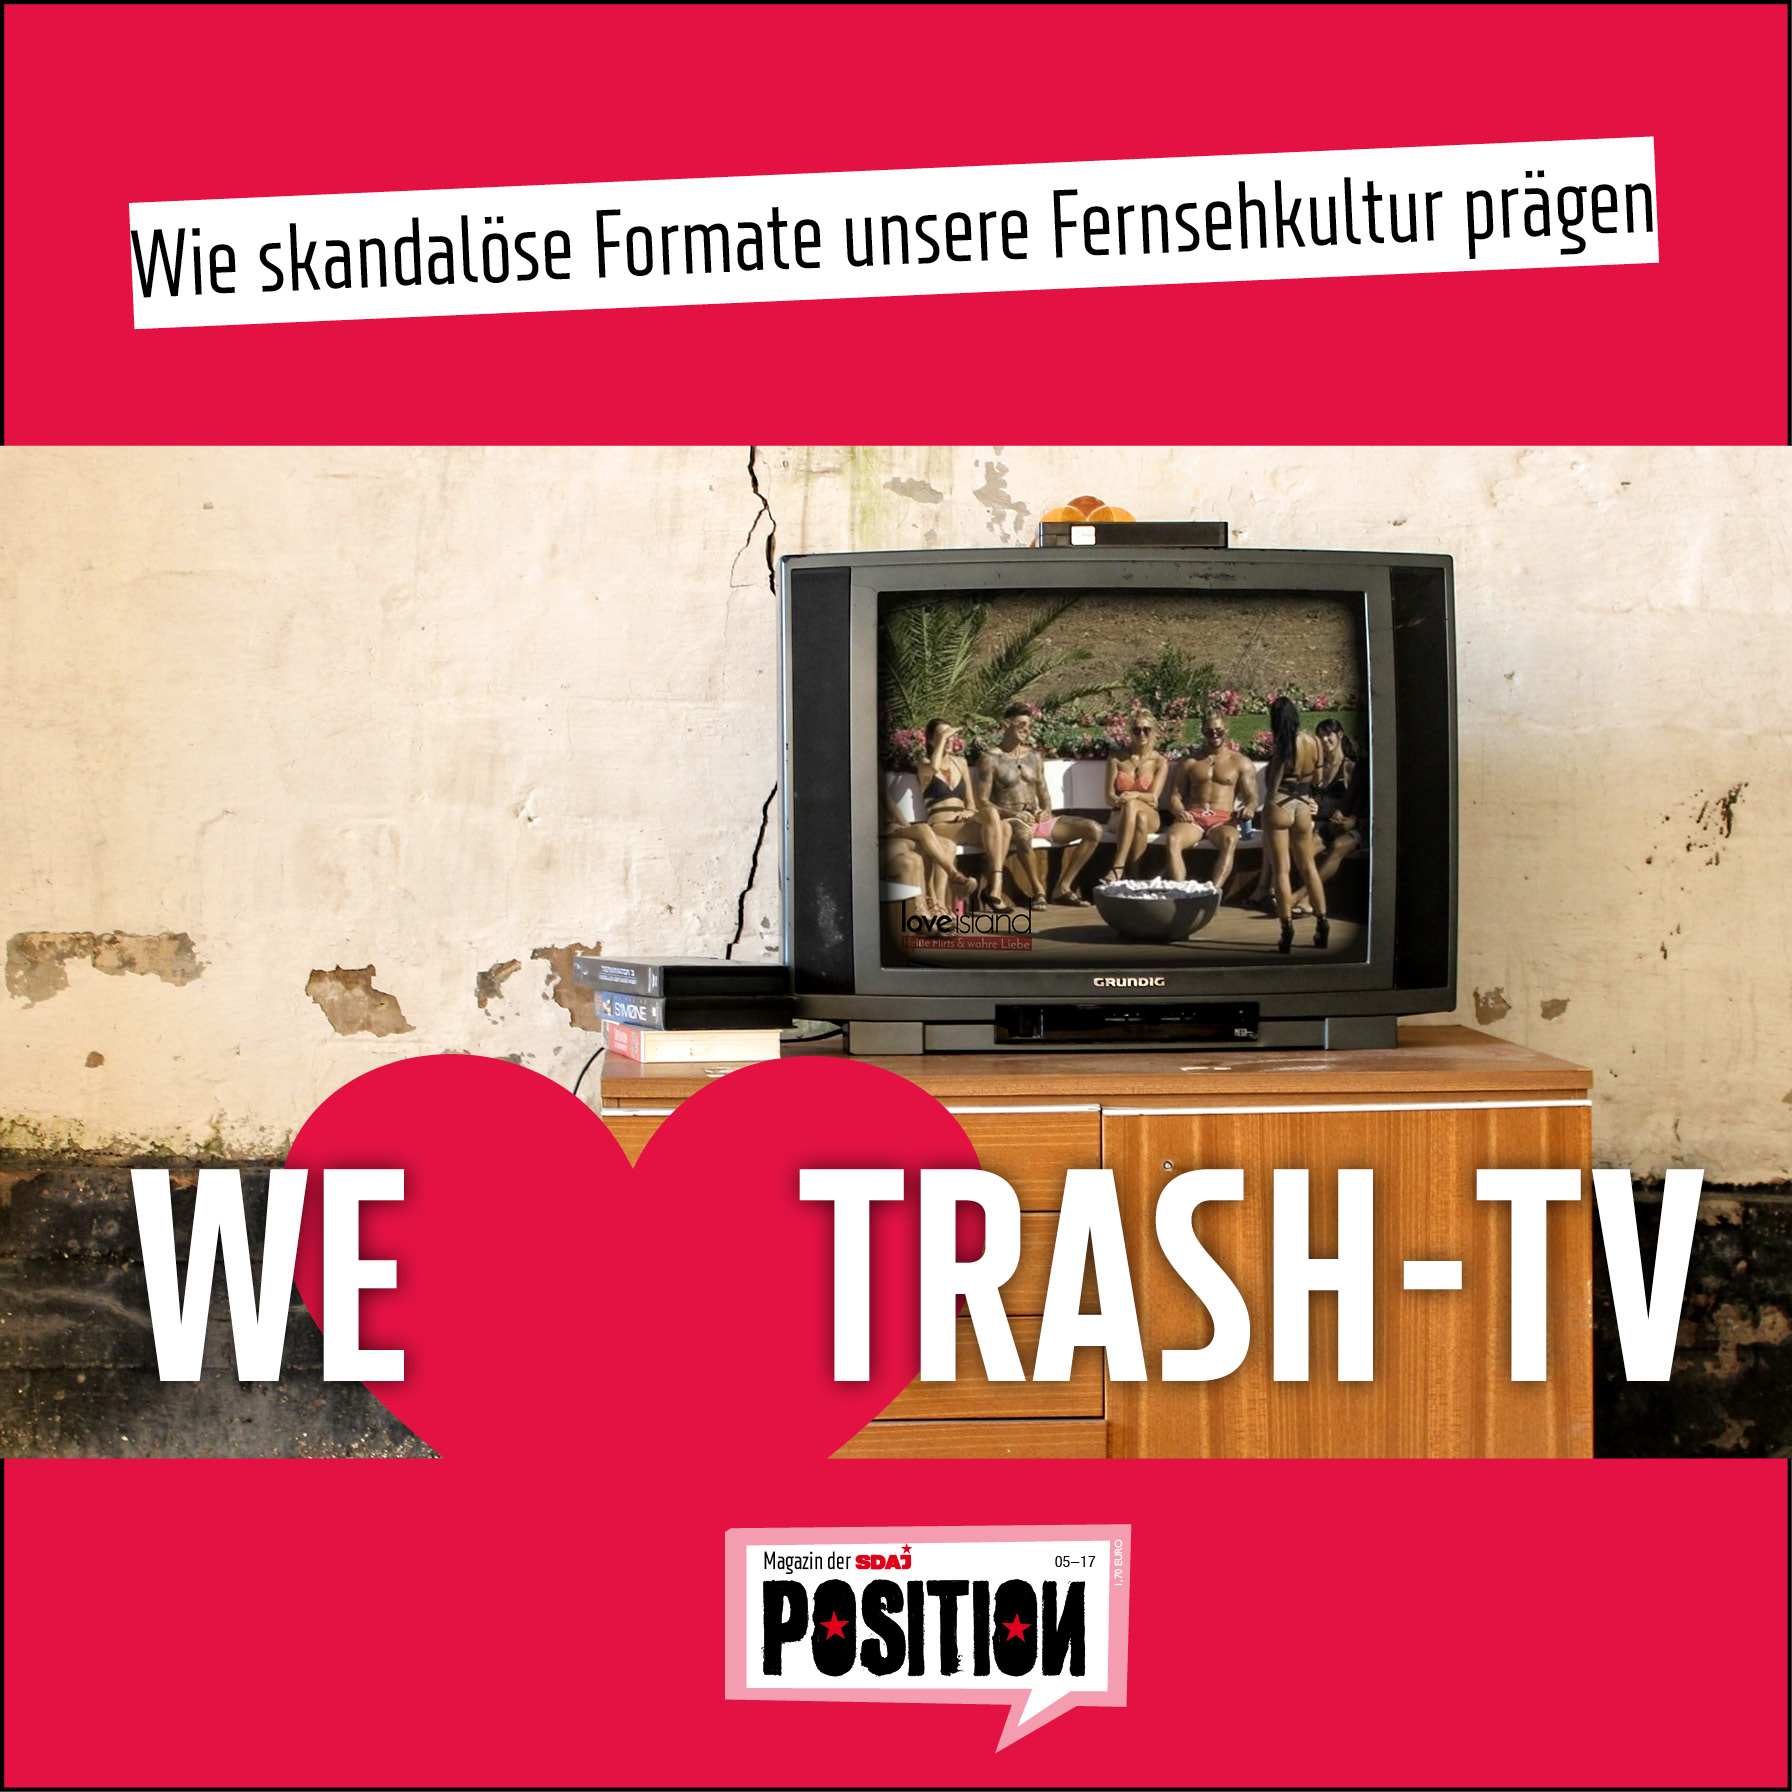 We love Trash-TV